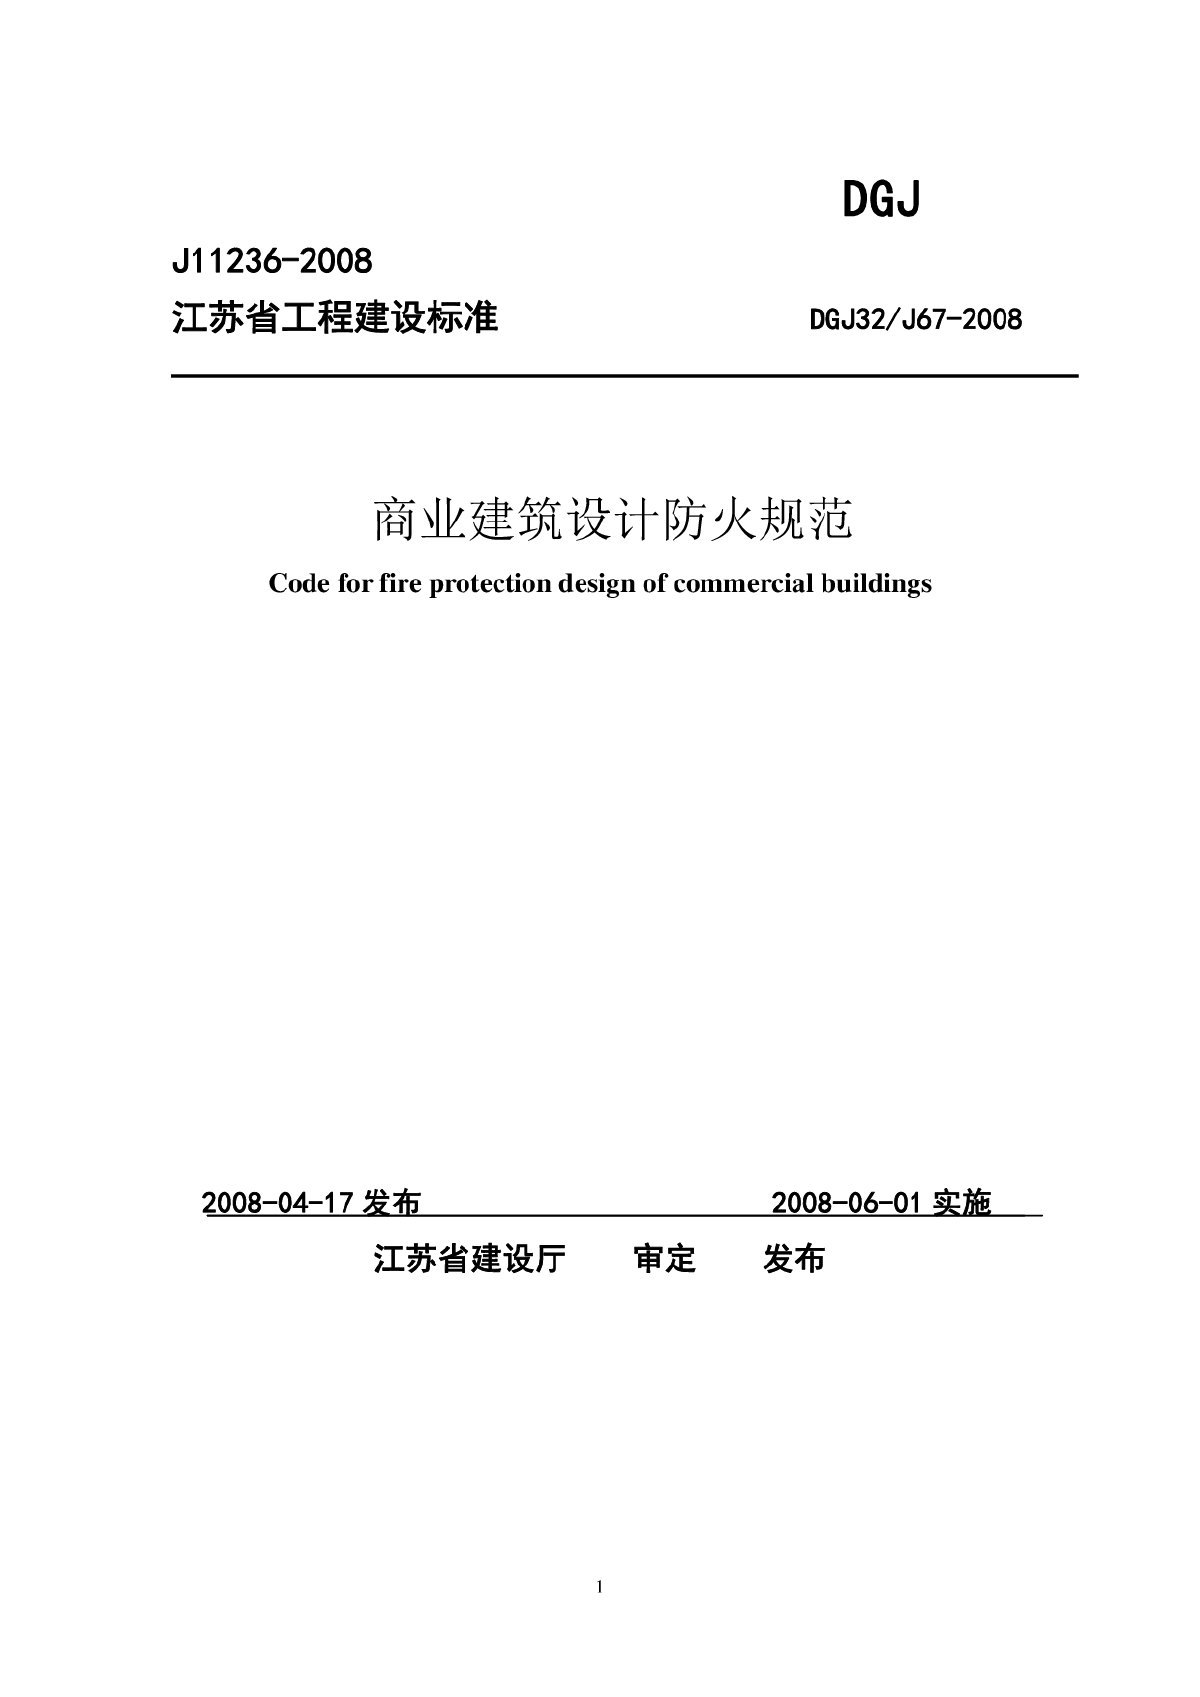 DGJ32 J 67-2008 江苏省商业建筑设计防火规范